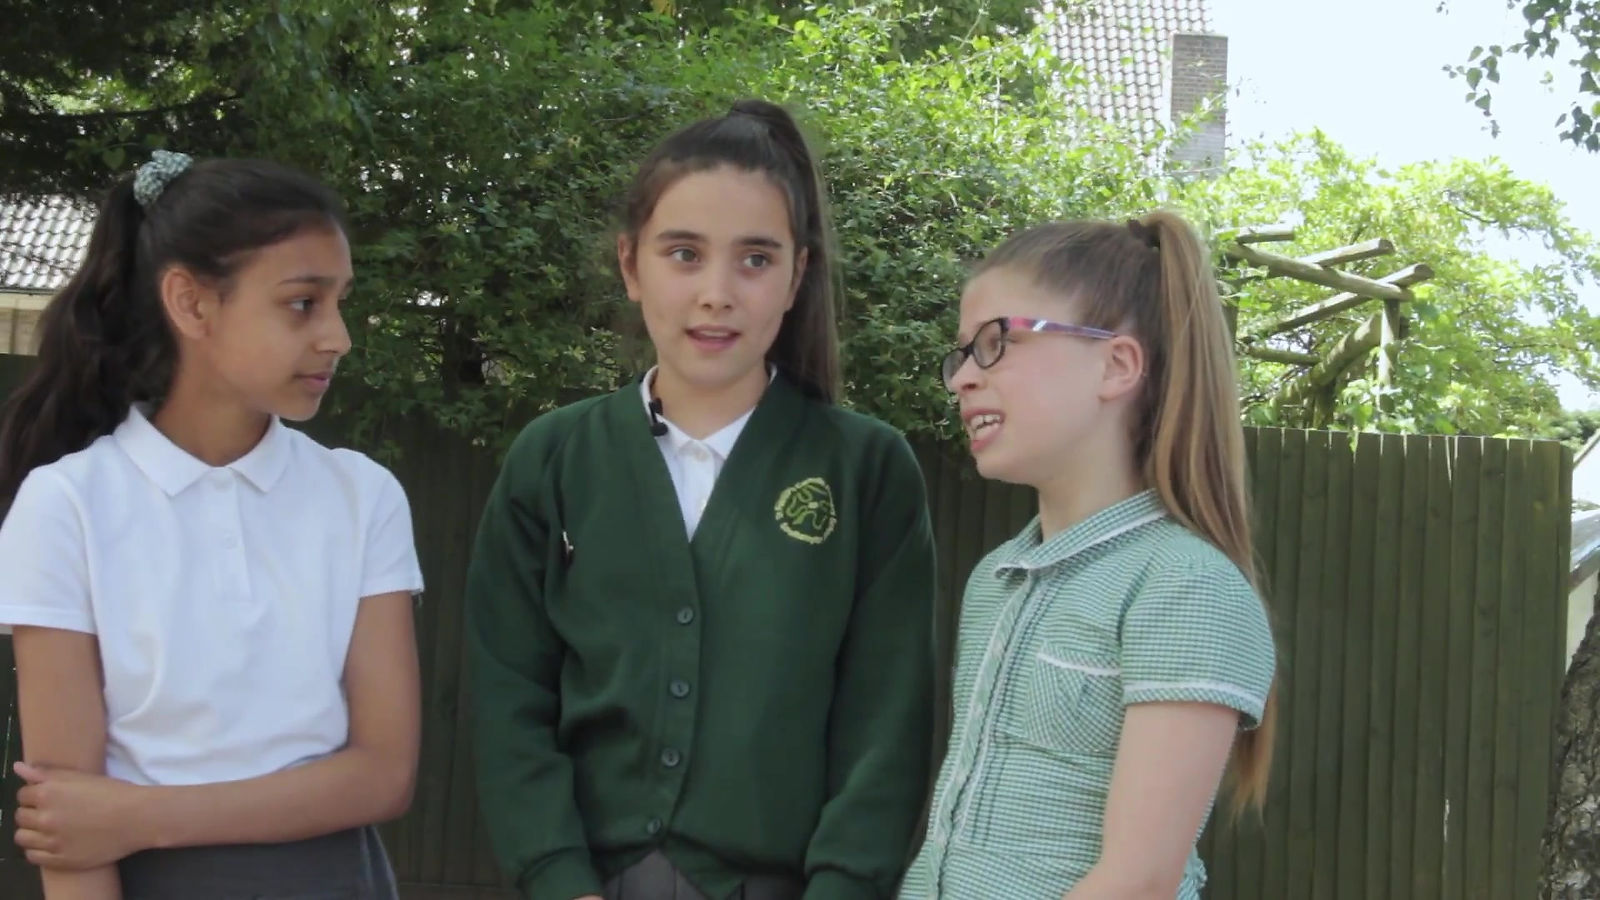 St Patricks School funding Video